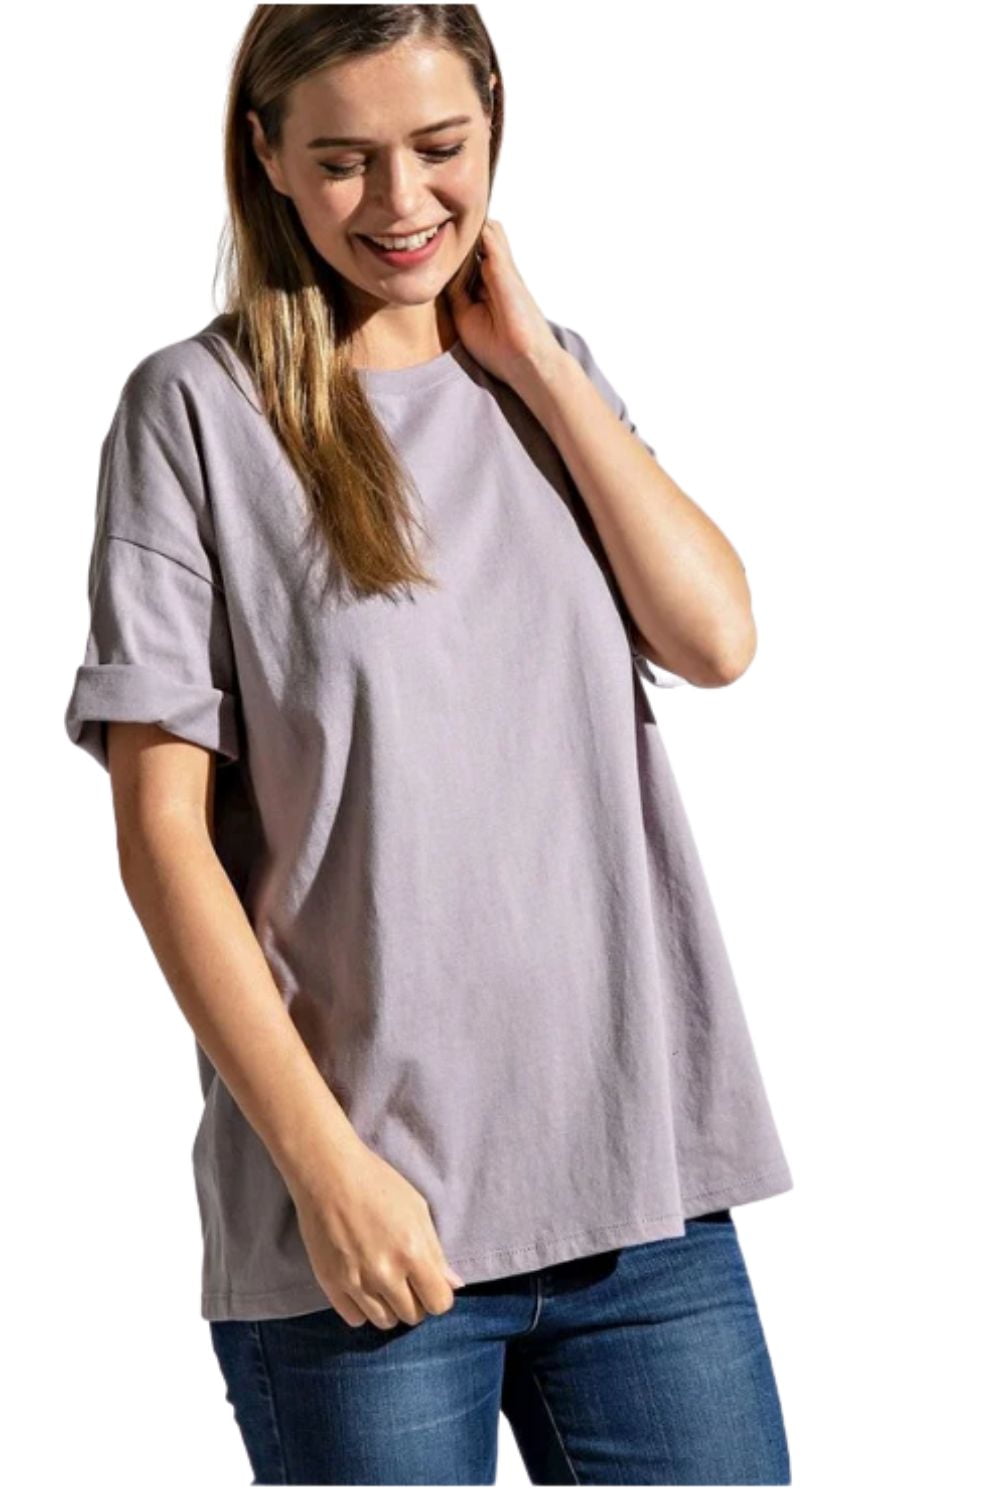 Rae Mode Womens Round Neck Rolled Short Sleeve Tee Shirt (Large, Lavender)  